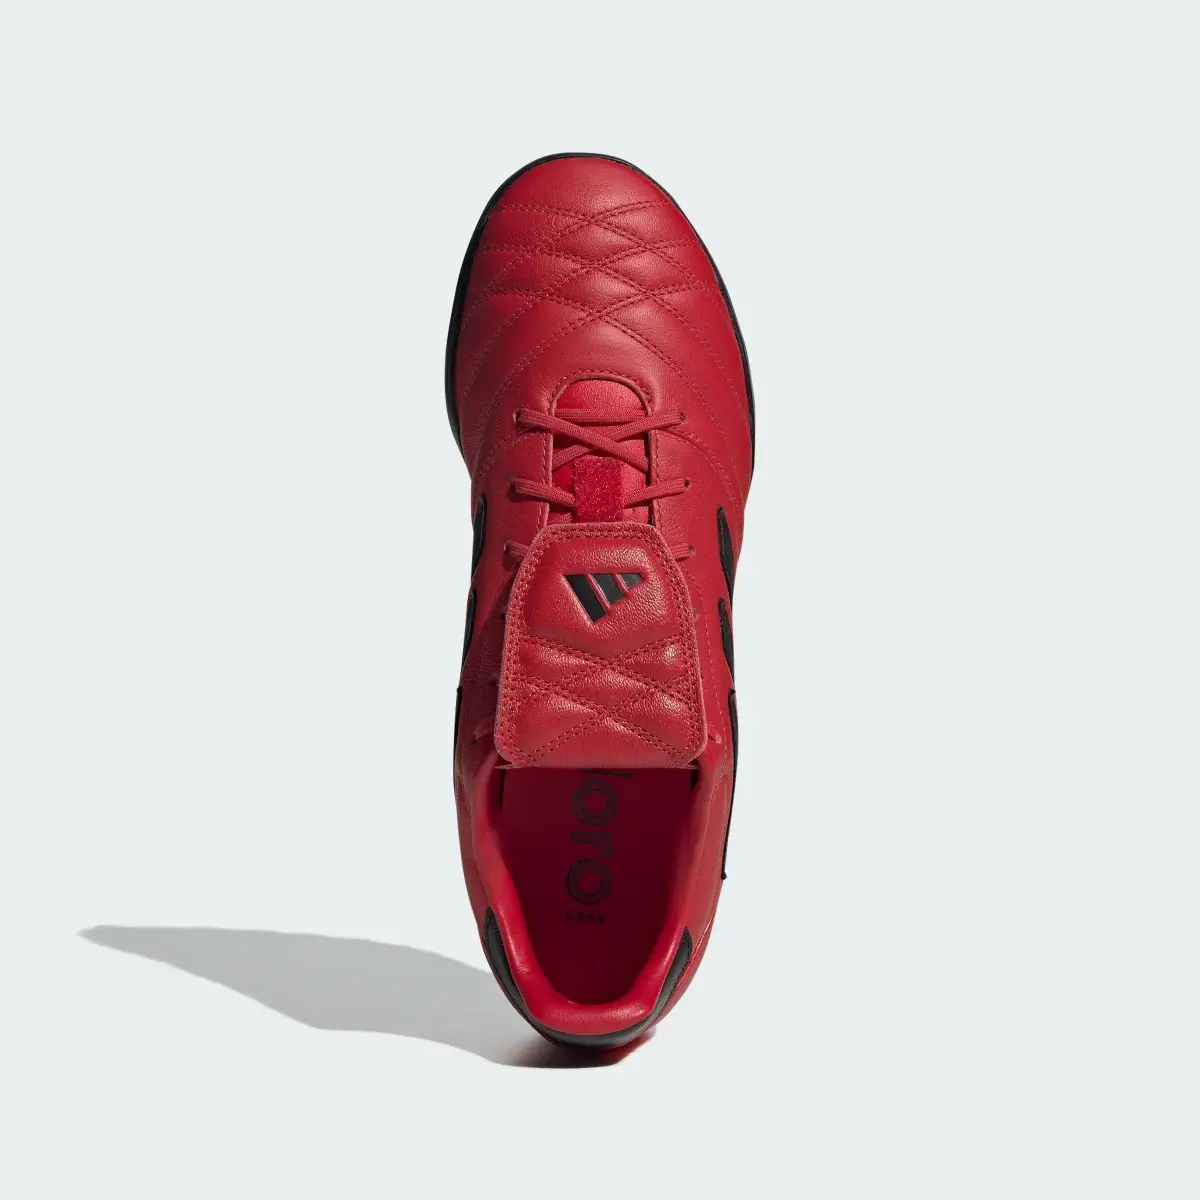 Adidas Copa Gloro Turf Boots. 3